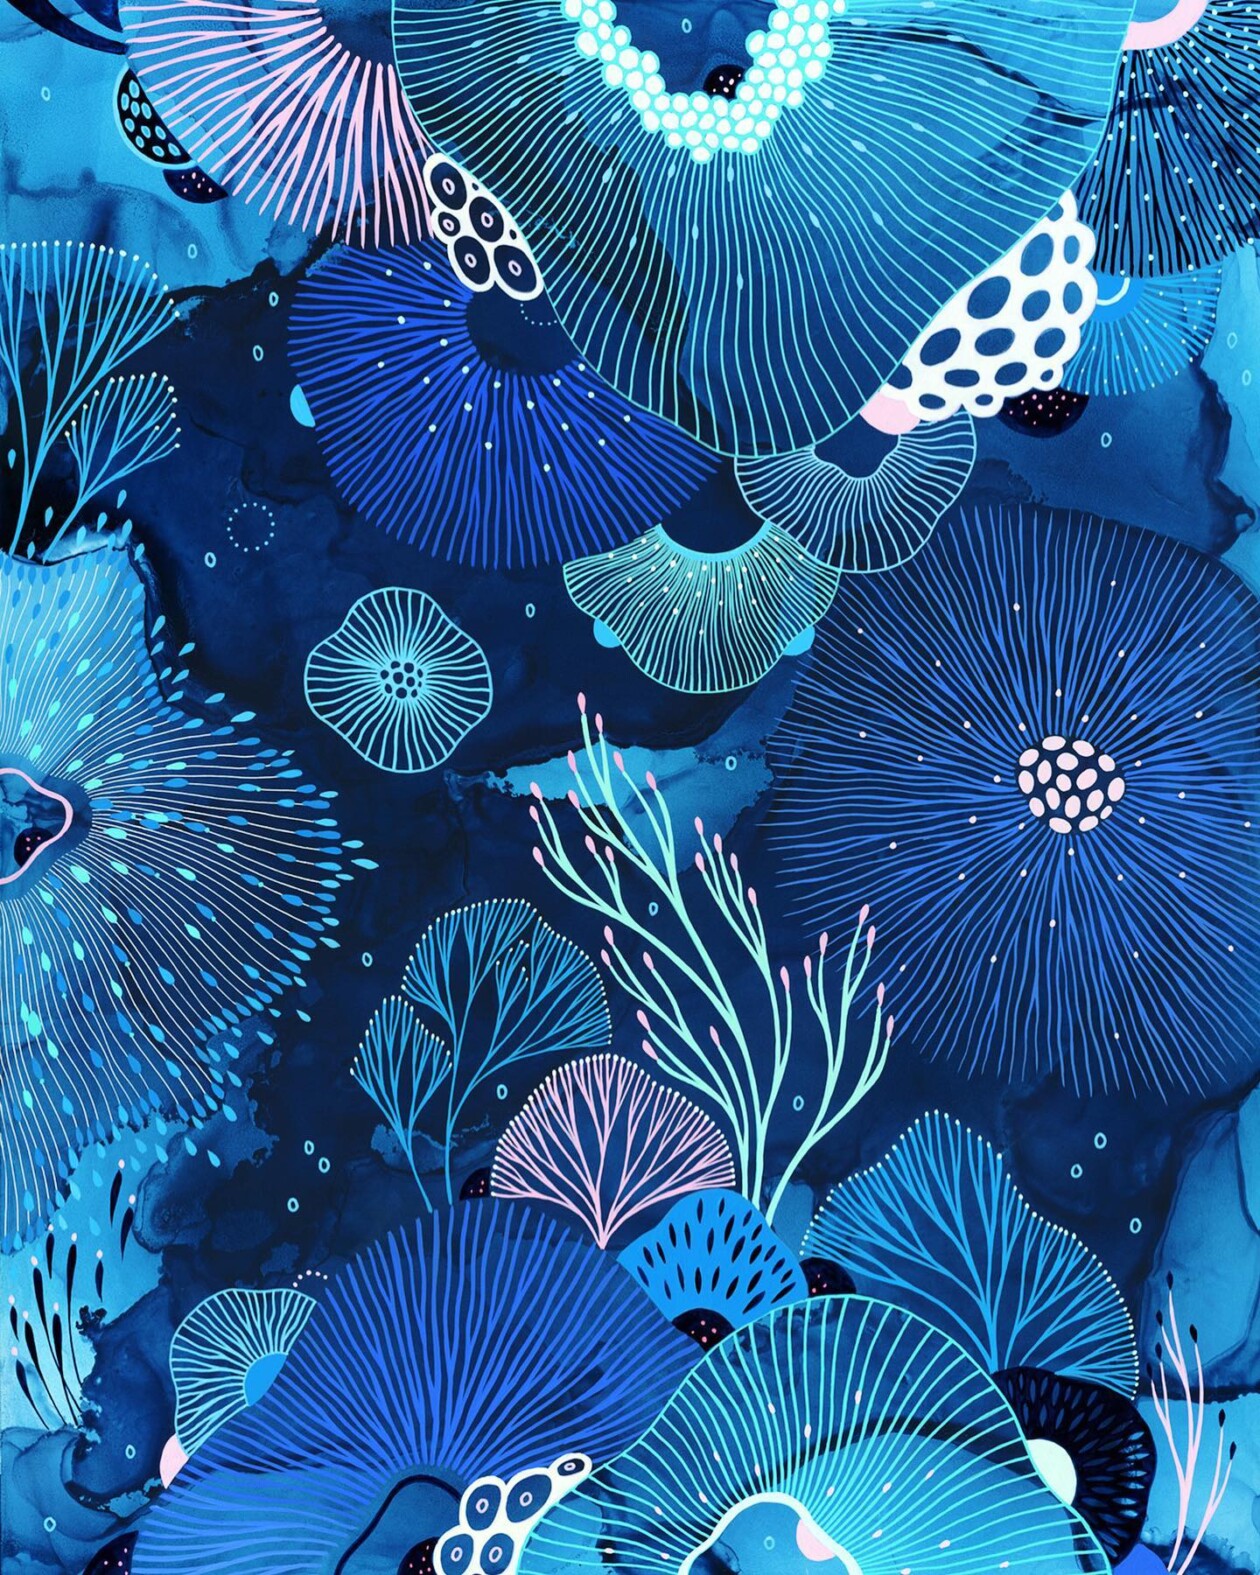 Flaring Mixed Media Paintings Of Dreamy Aquatic Ecosystems By Yellena James (16)